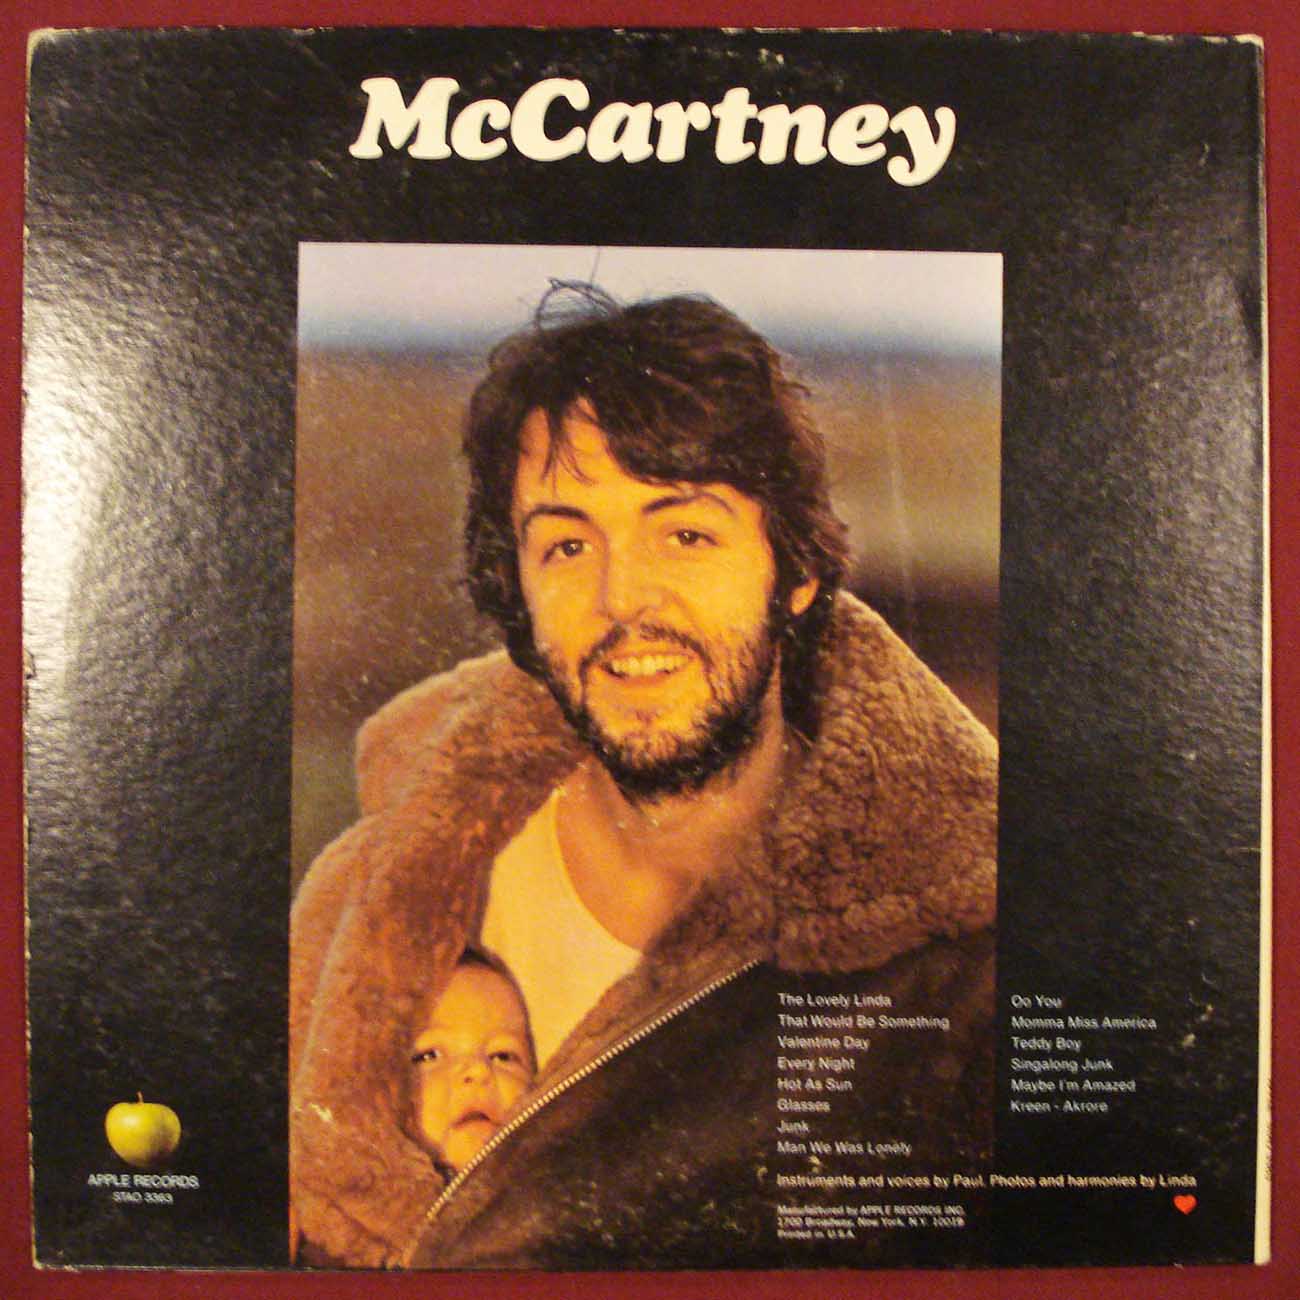 Paul McCartney - McCartney (1970) Vinyl LP 33rpm STAO-3363